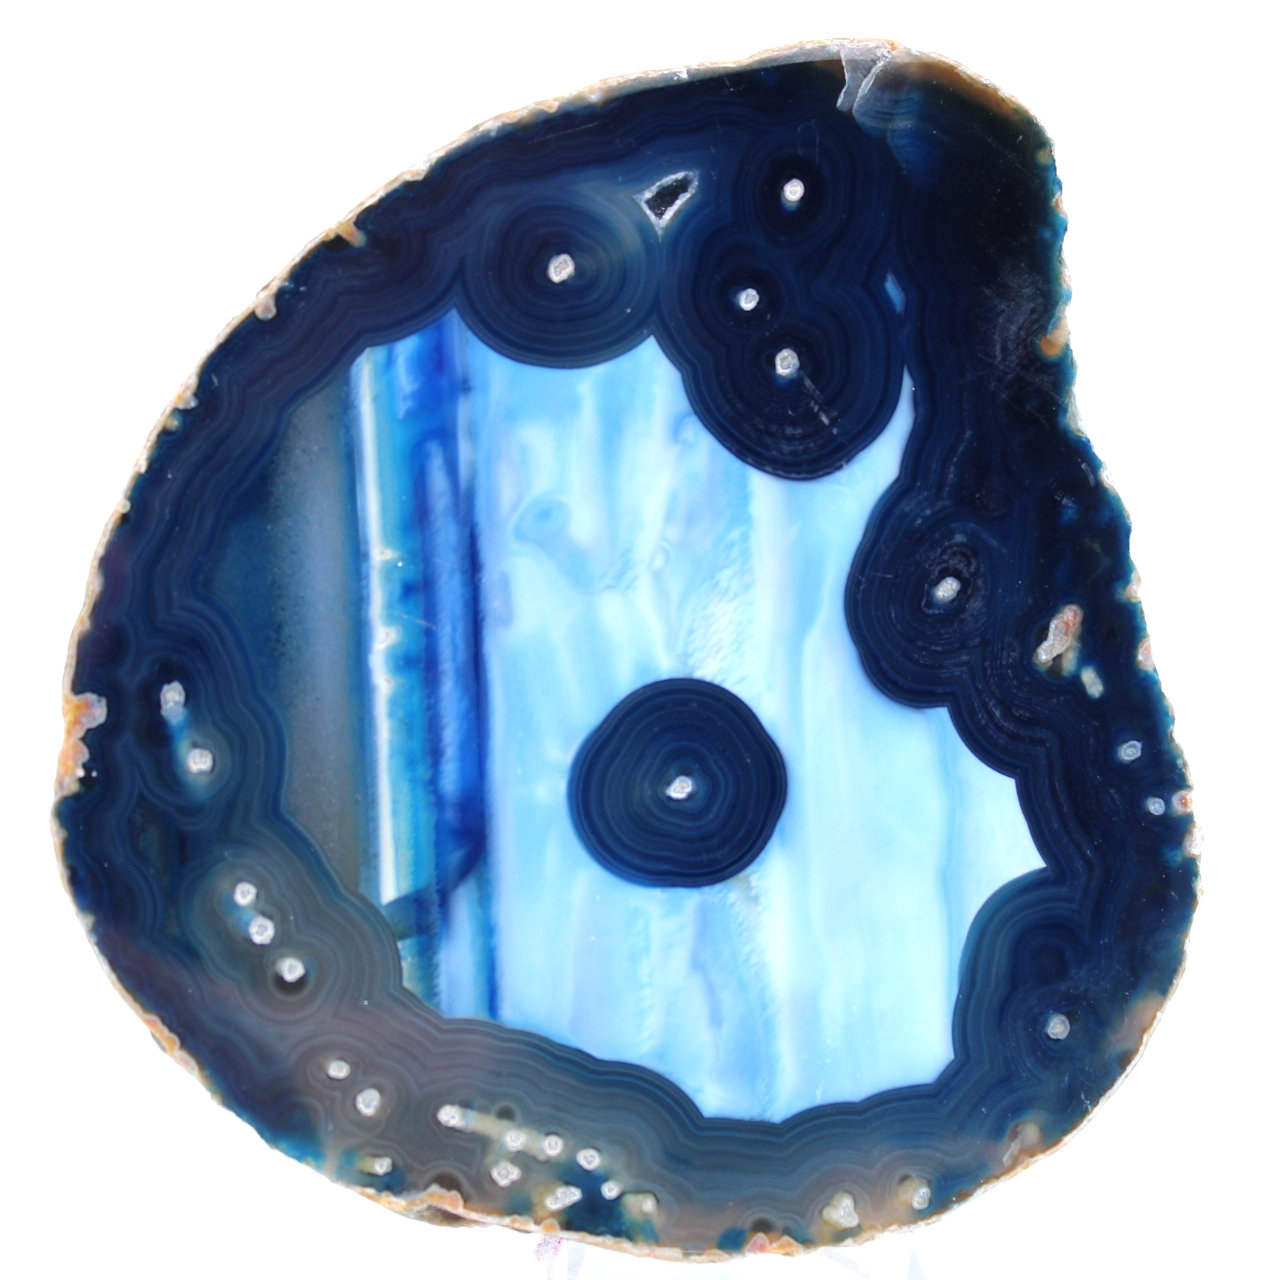 Blaue Achatscheibe